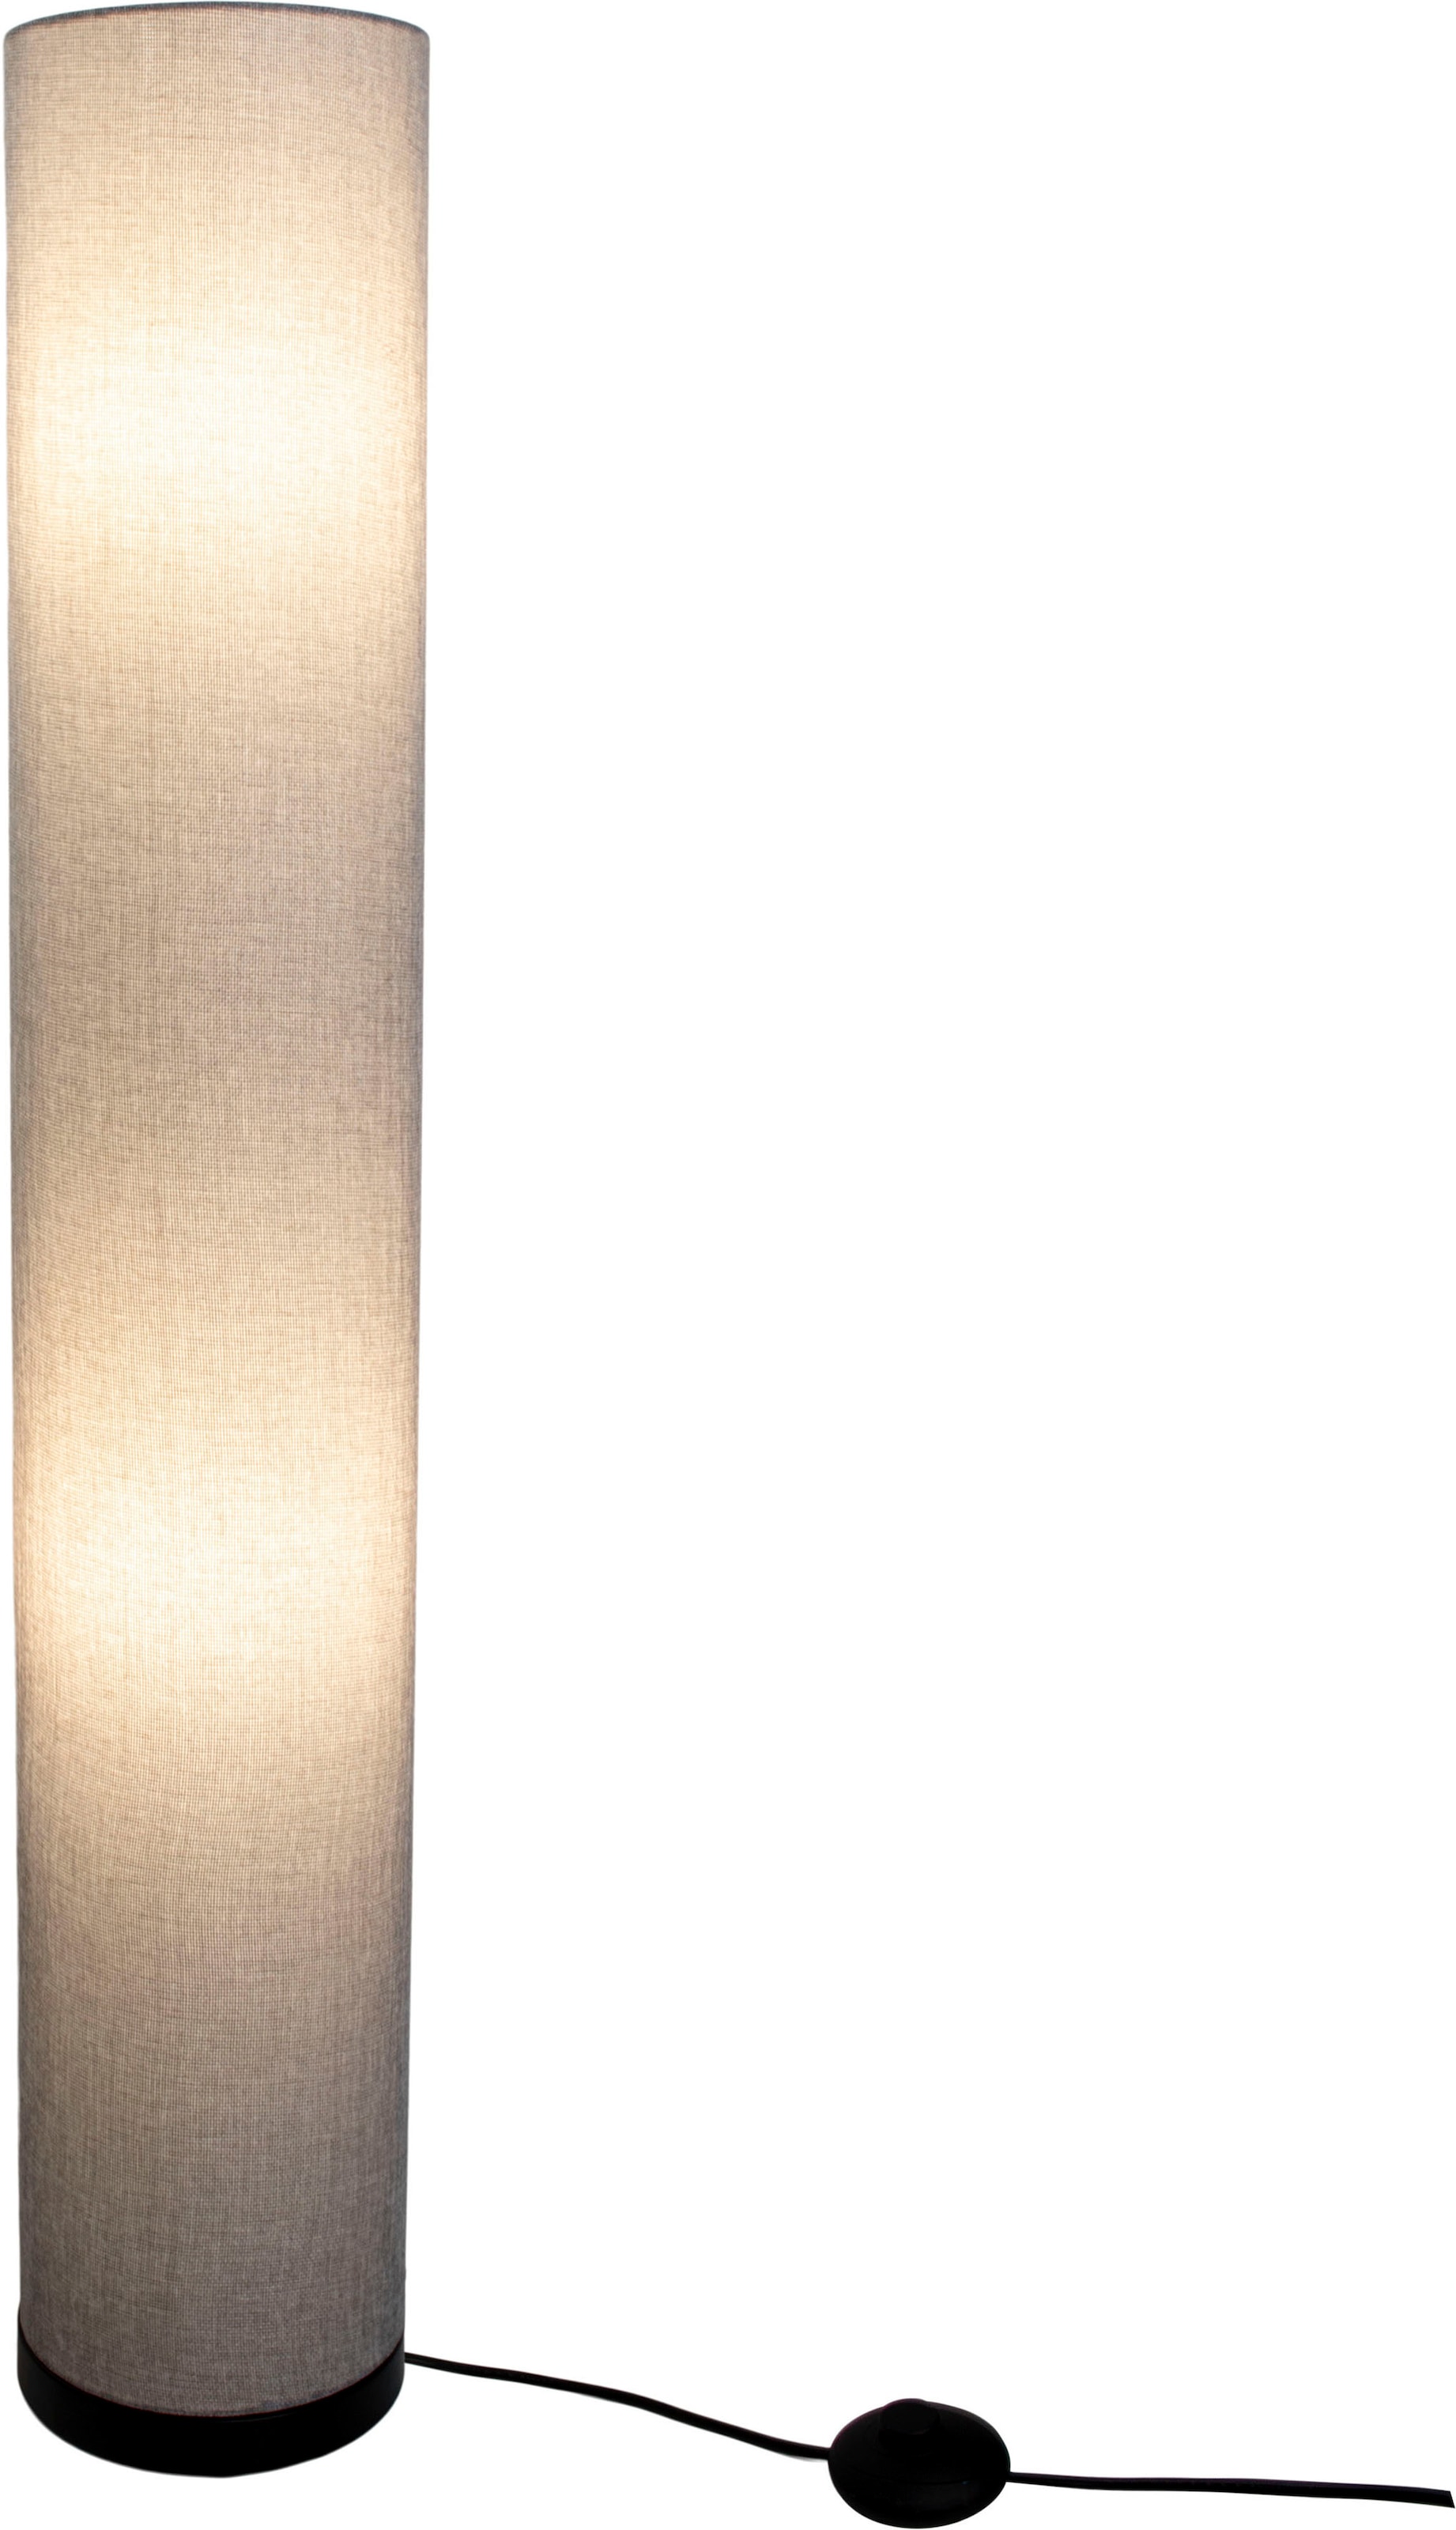 näve Stehlampe »Beate«, 3 flammig, Leuchtmittel E27 | ohne Leuchtmittel, Metall/Textil, exkl. 3x E27 max. 40W, Höhe: 110cm, Farbe: grau